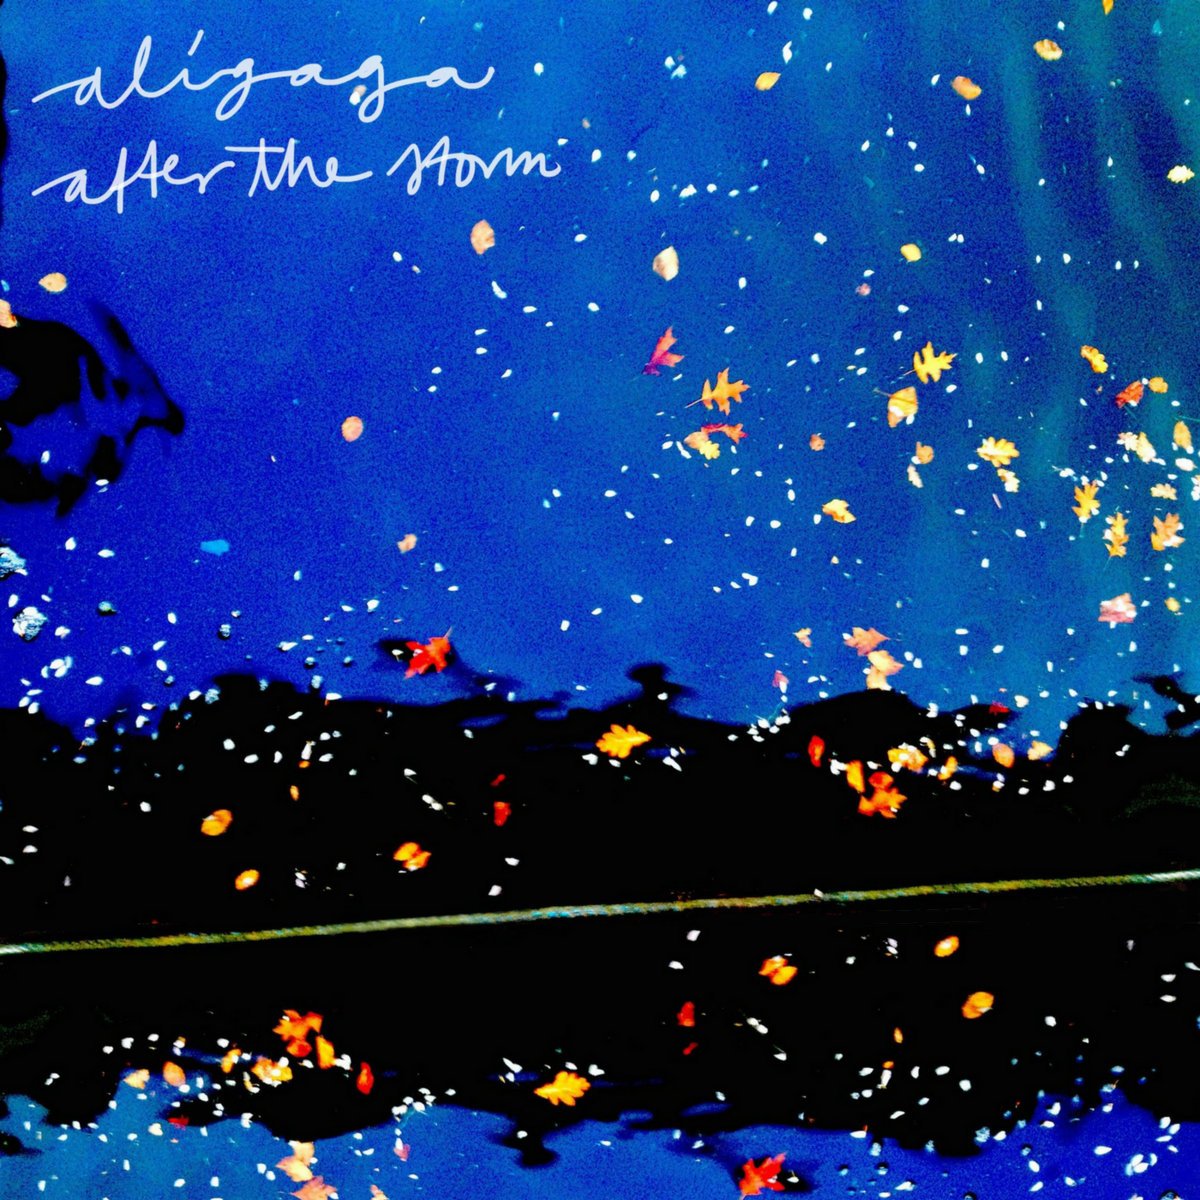 Aligaga -  After the Storm